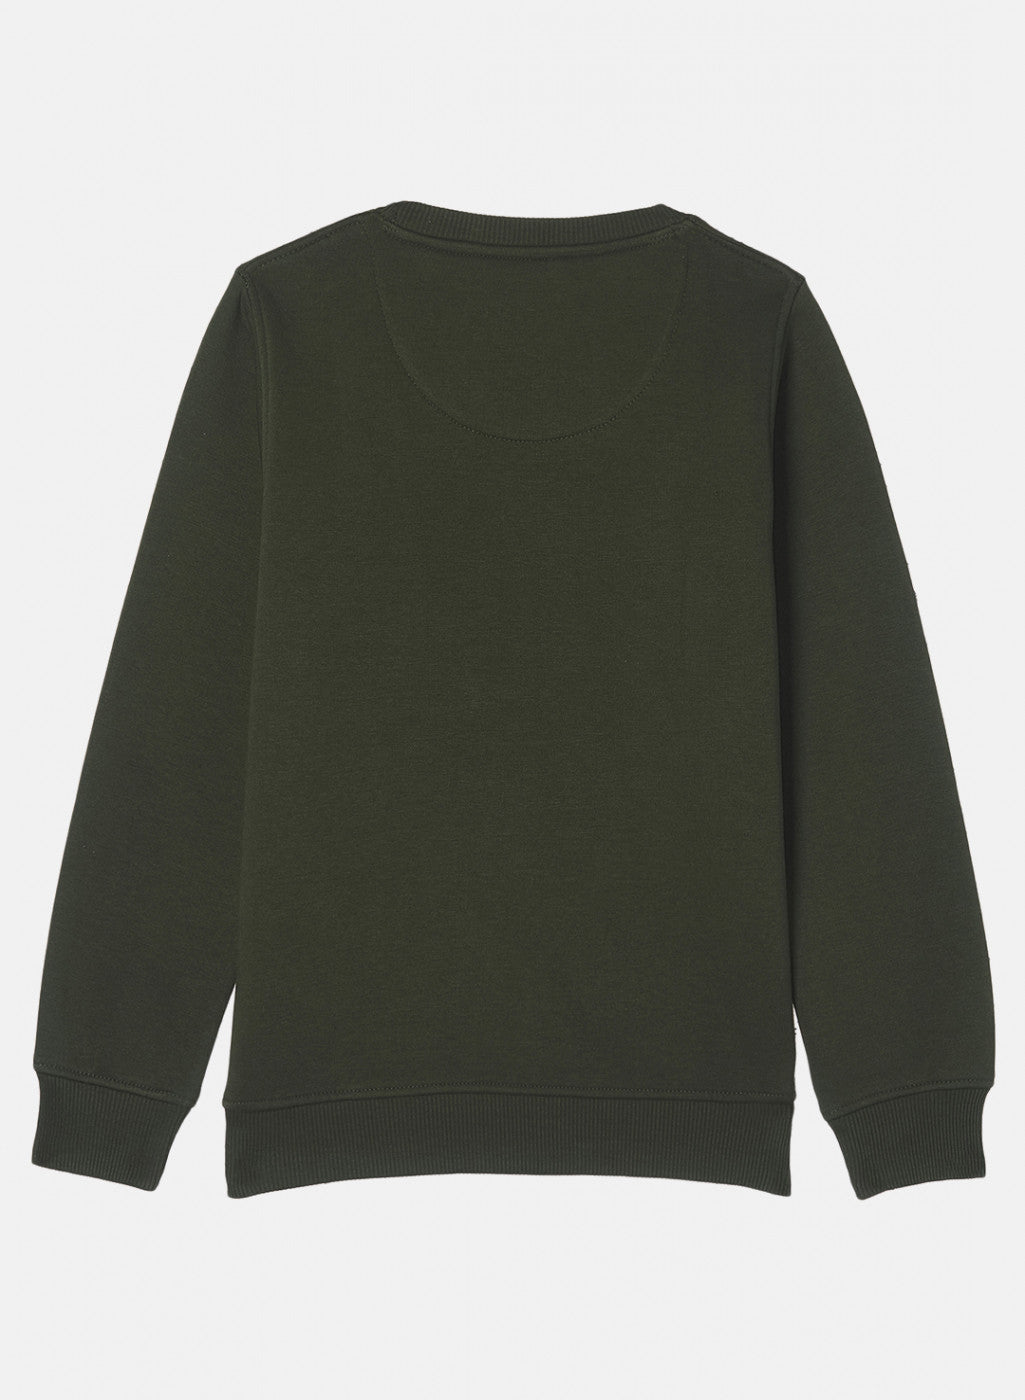 Boys Olive Printed Sweatshirt